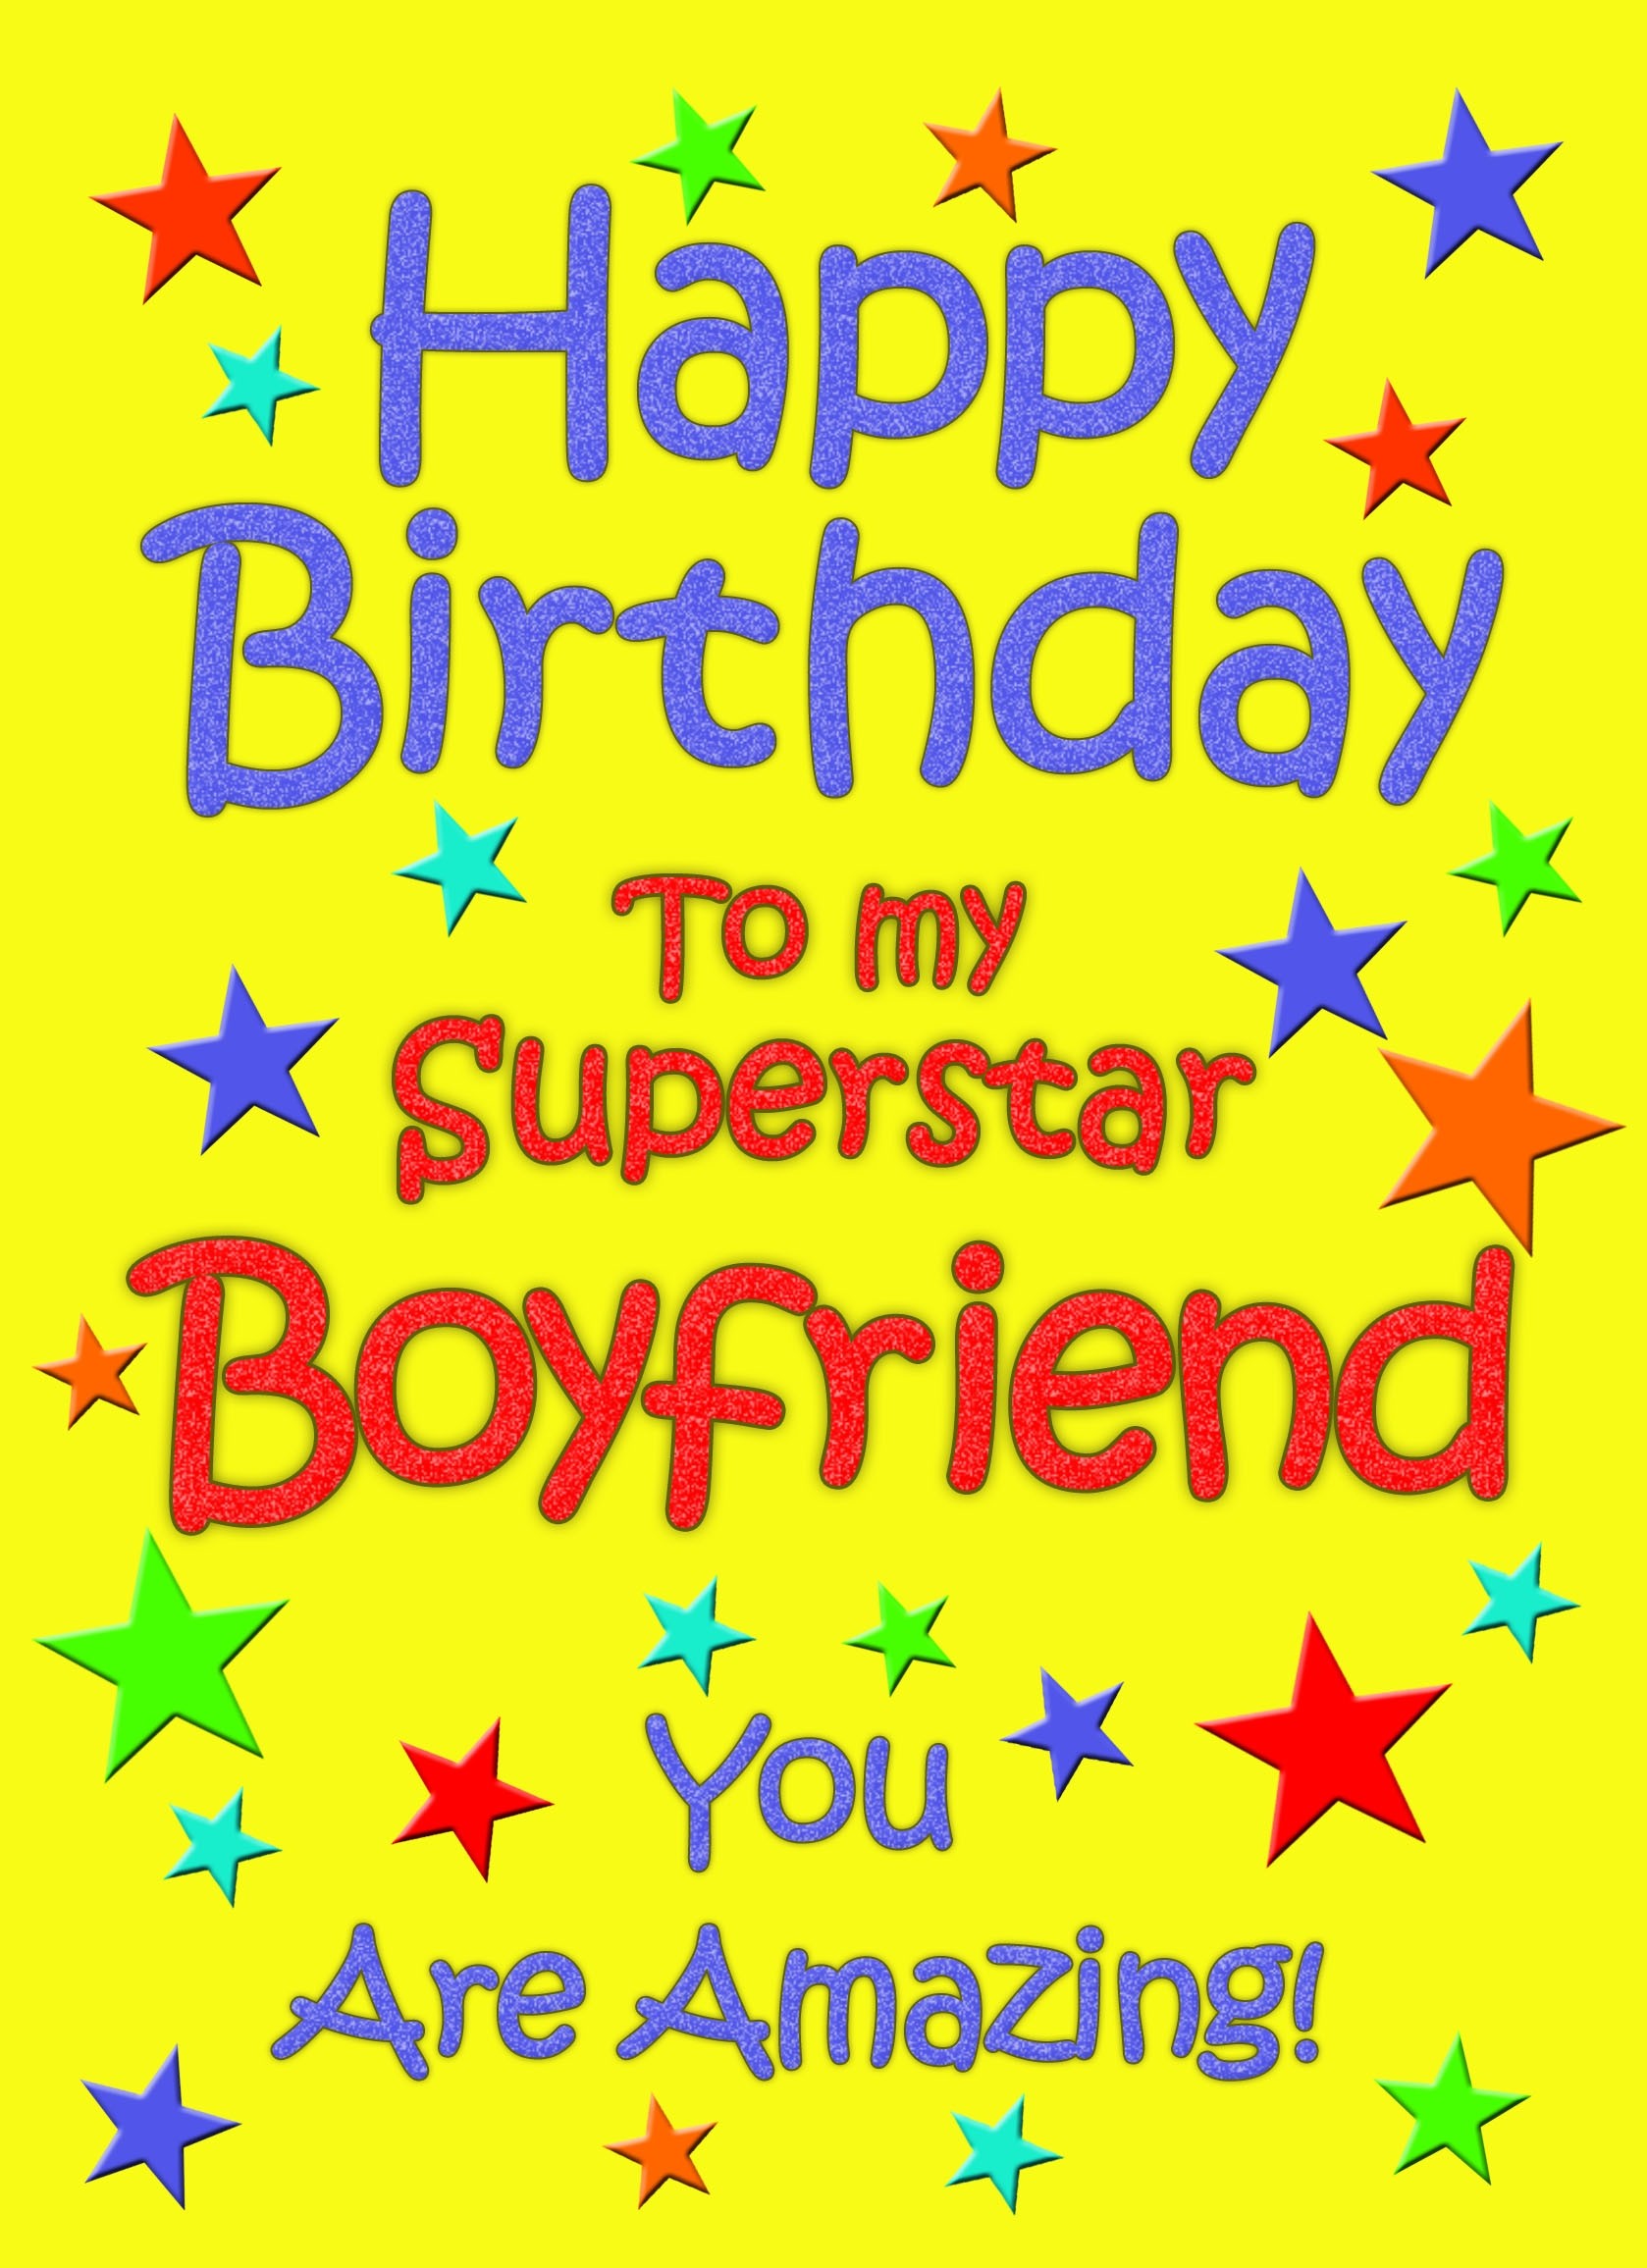 Boyfriend Birthday Card (Yellow)